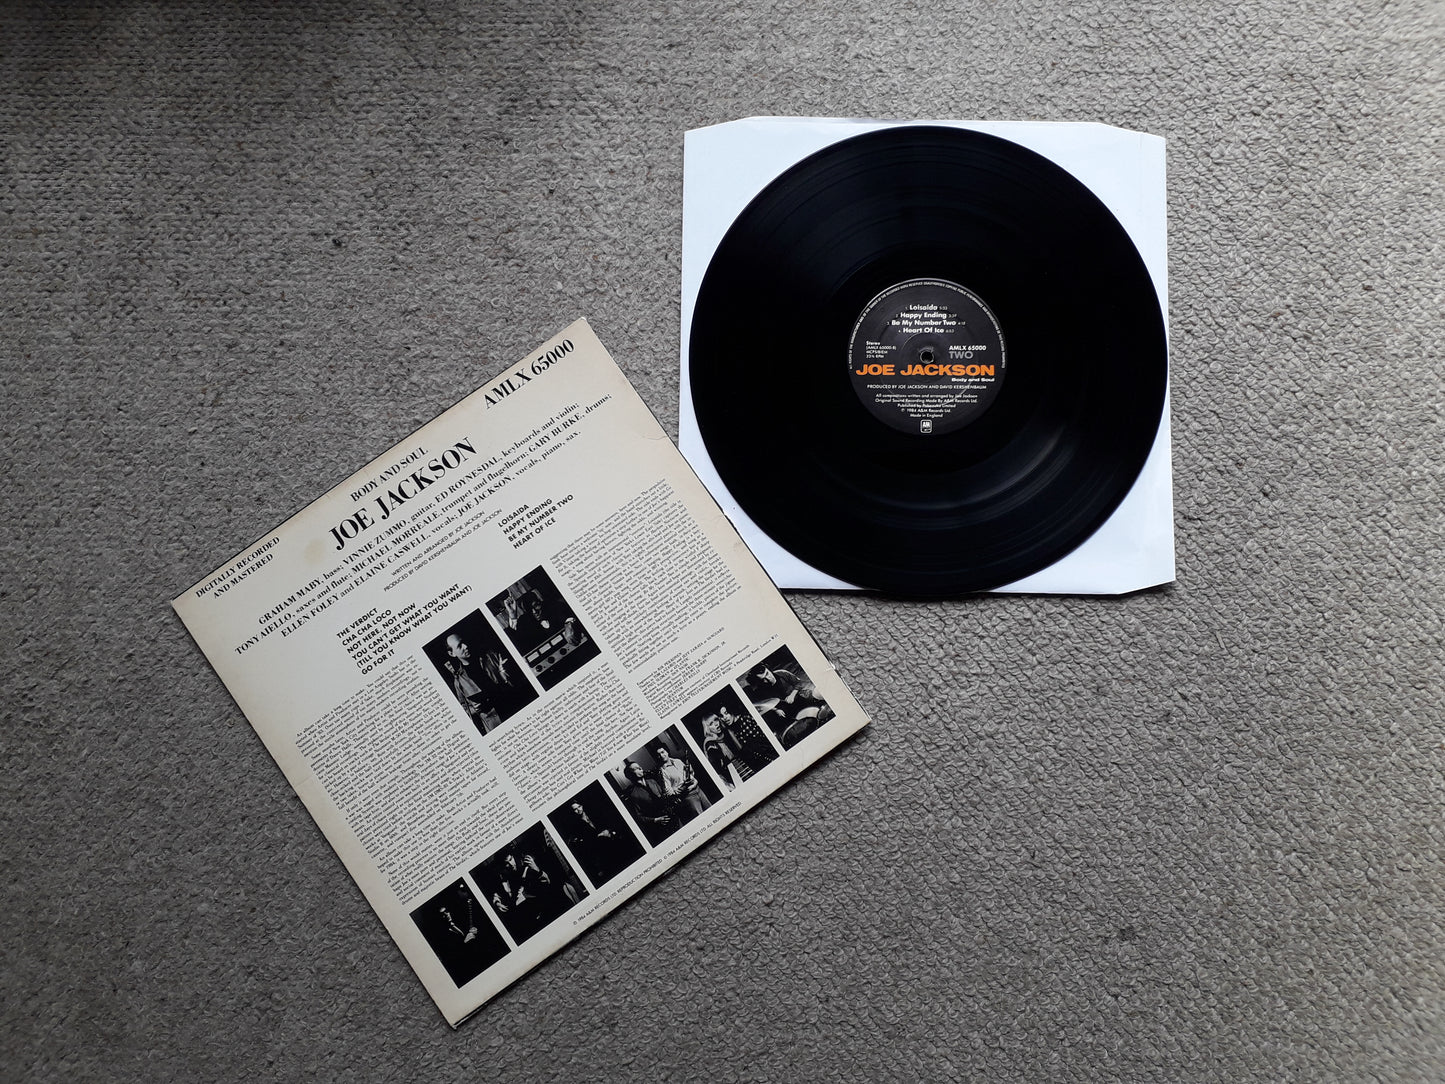 Joe Jackson-Body And Soul LP (AMLX 65000)